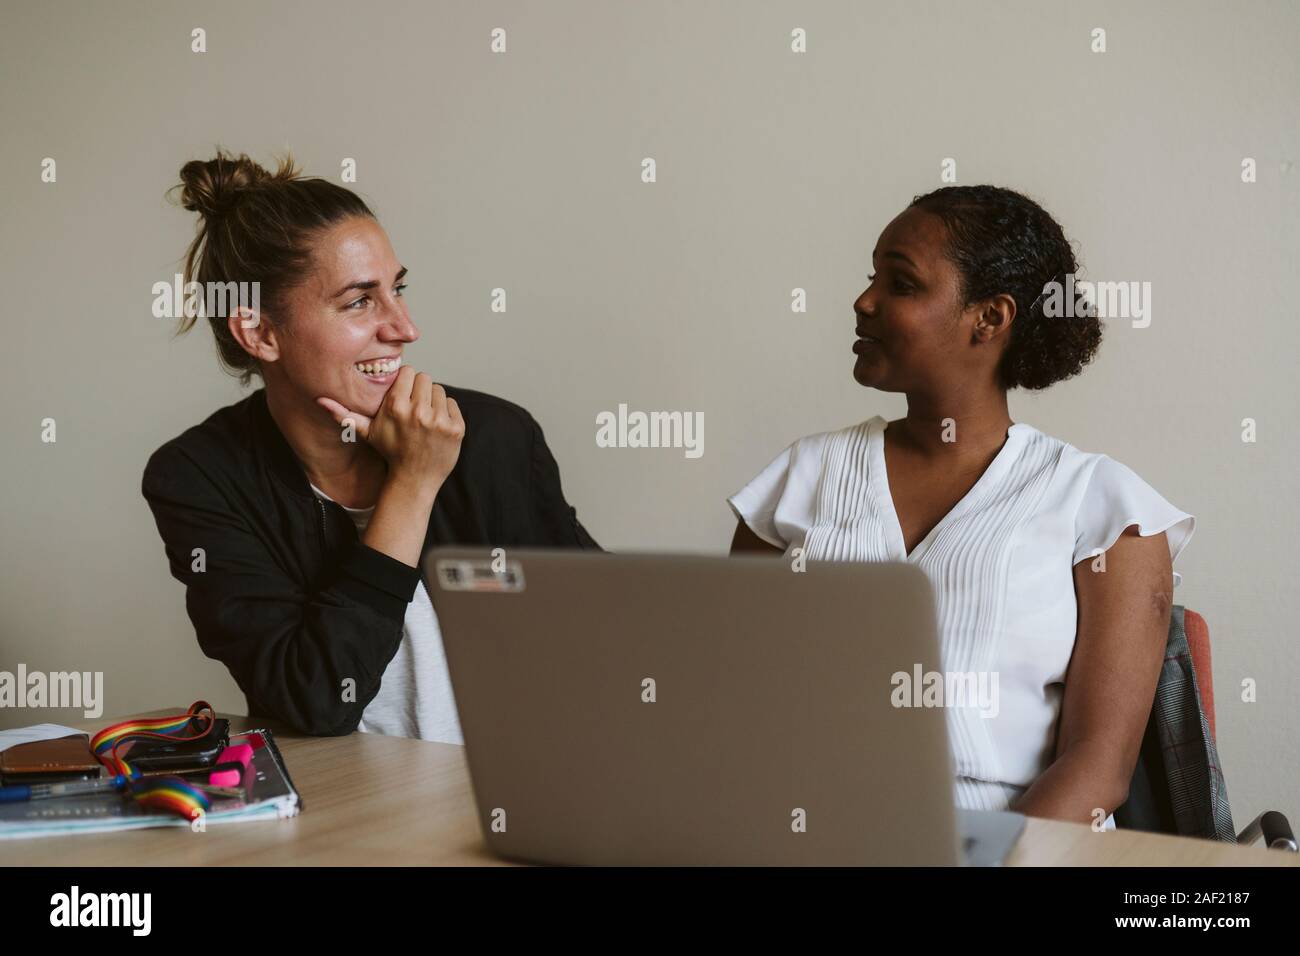 Smiling women talking in office Stock Photo